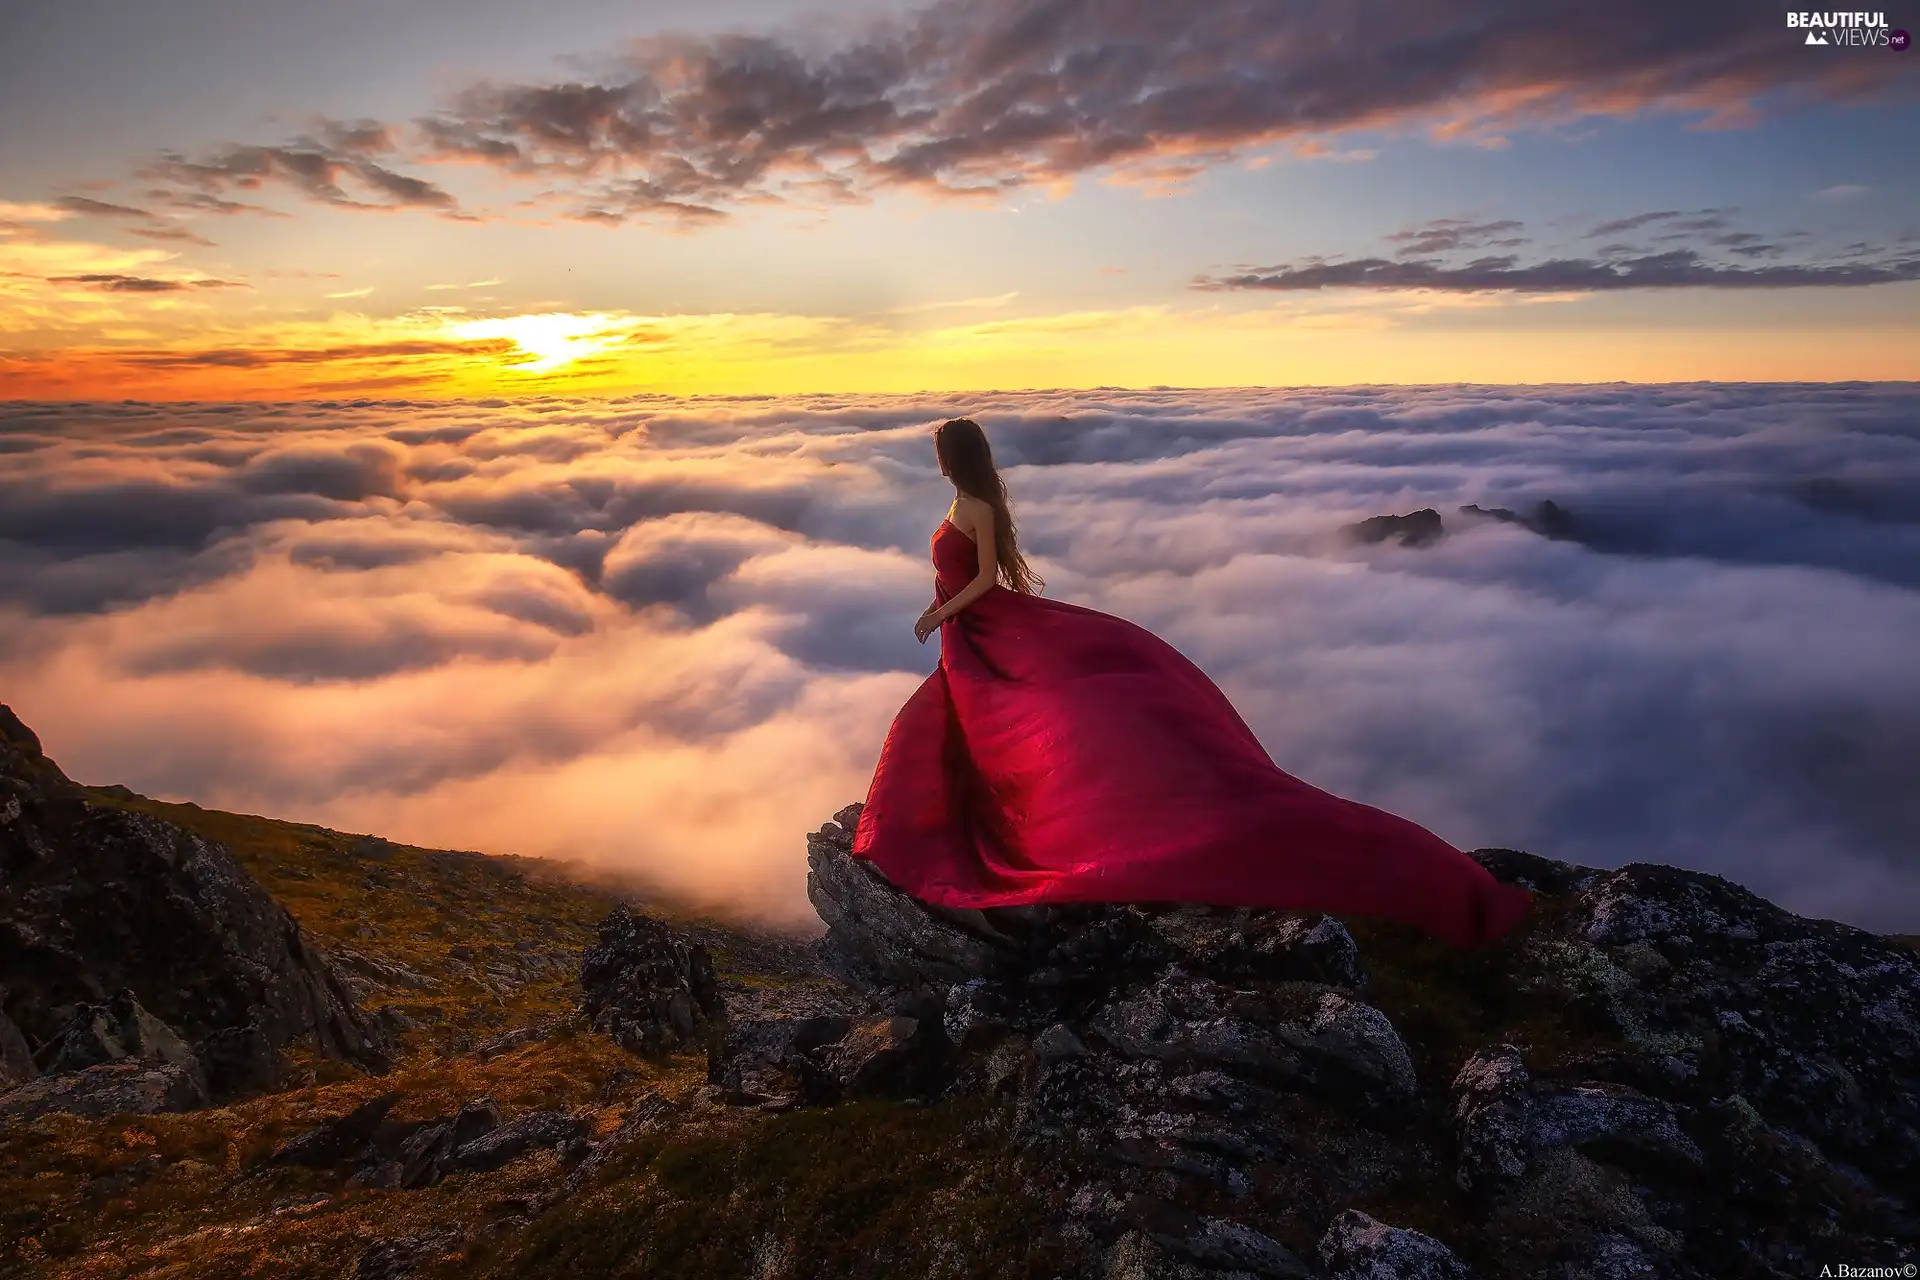 Mountains, Fog, Dress, Sunrise, red hot, Senja Island, Norway, Women